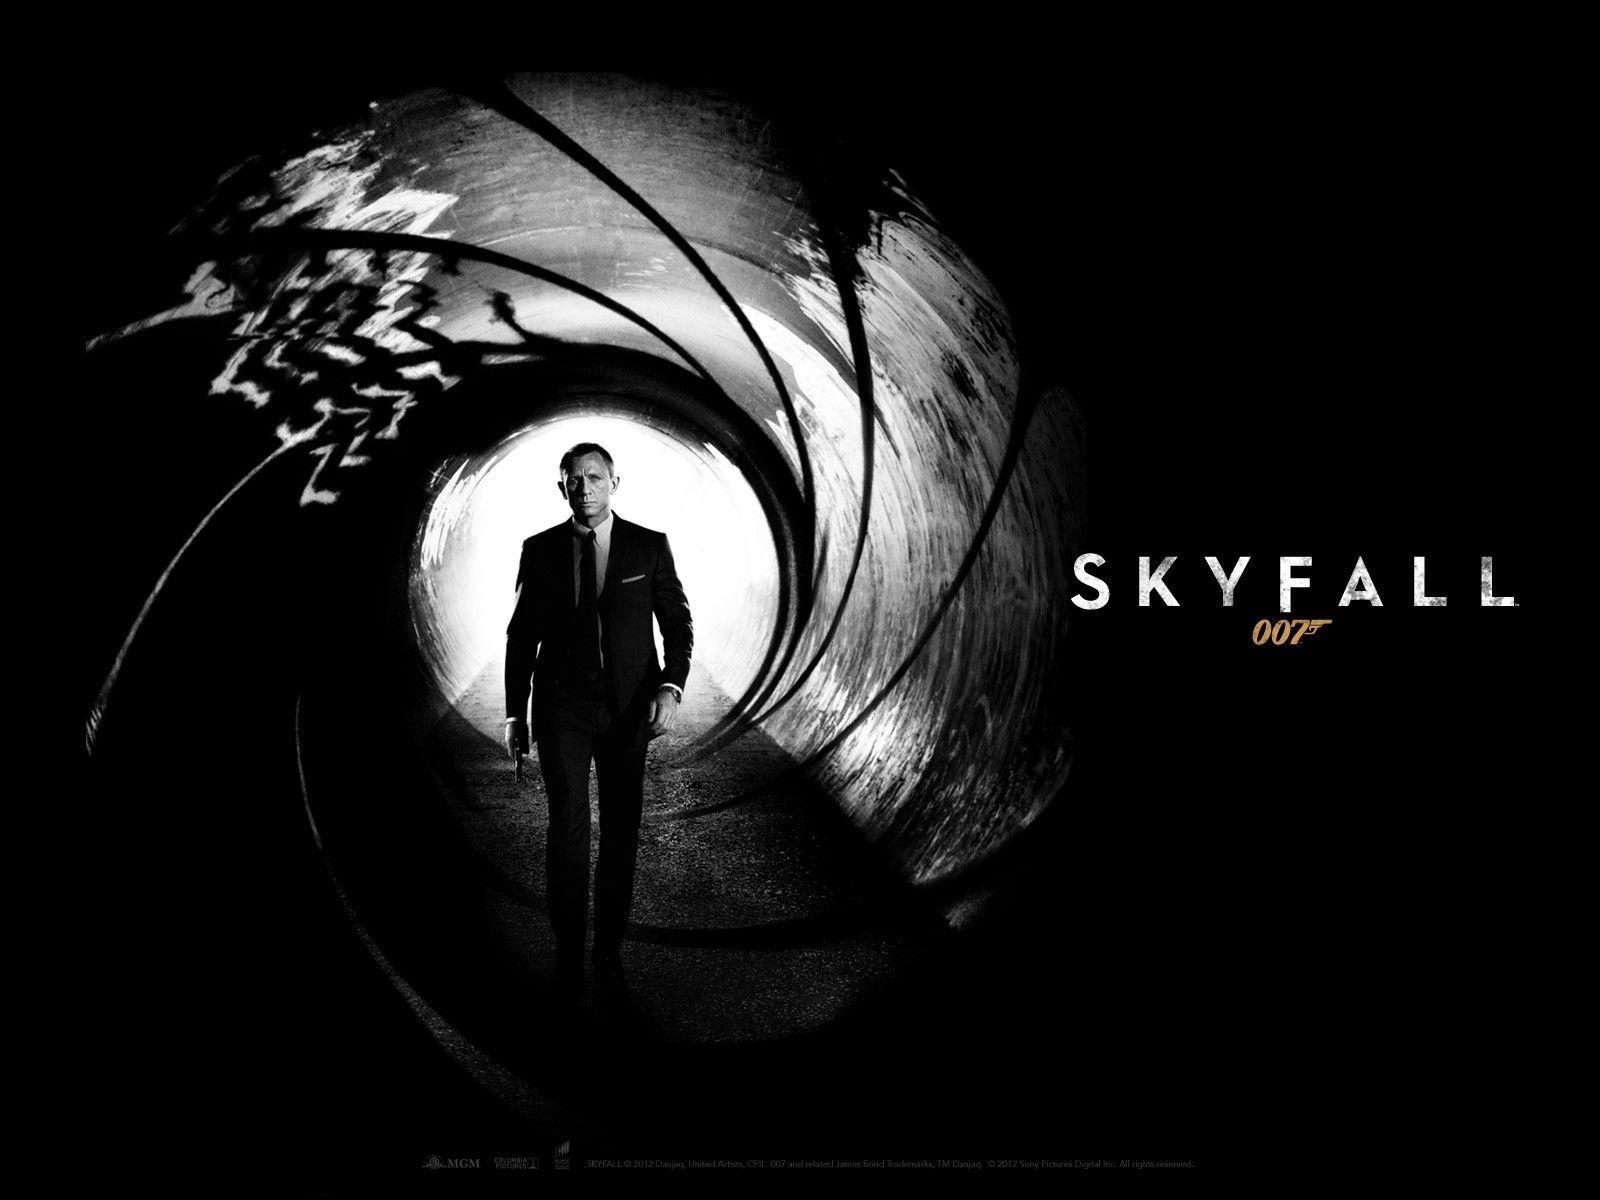 Skyfall 007 Wallpaper: thesmashable.com. Awesome Wallpaper